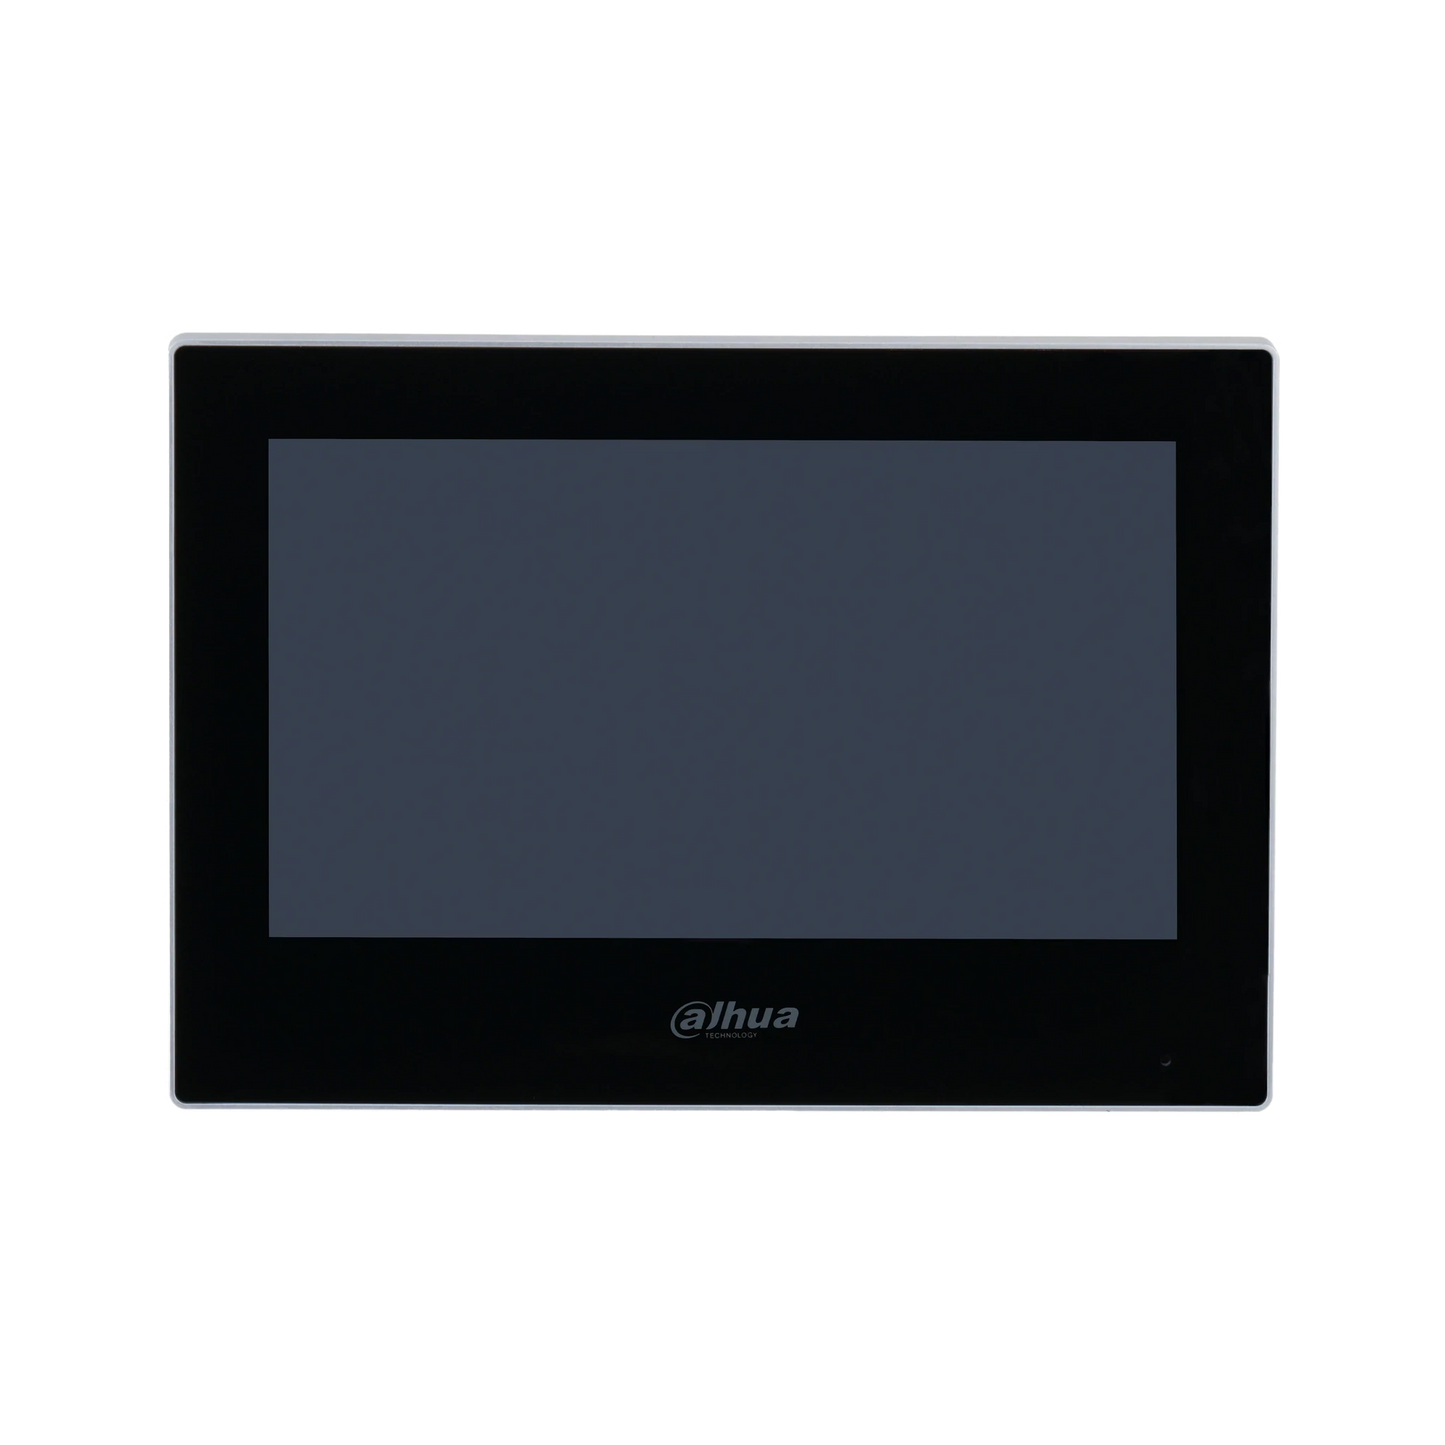 Dahua Intercom, 7inch Touch Screen IP Intercom Kit